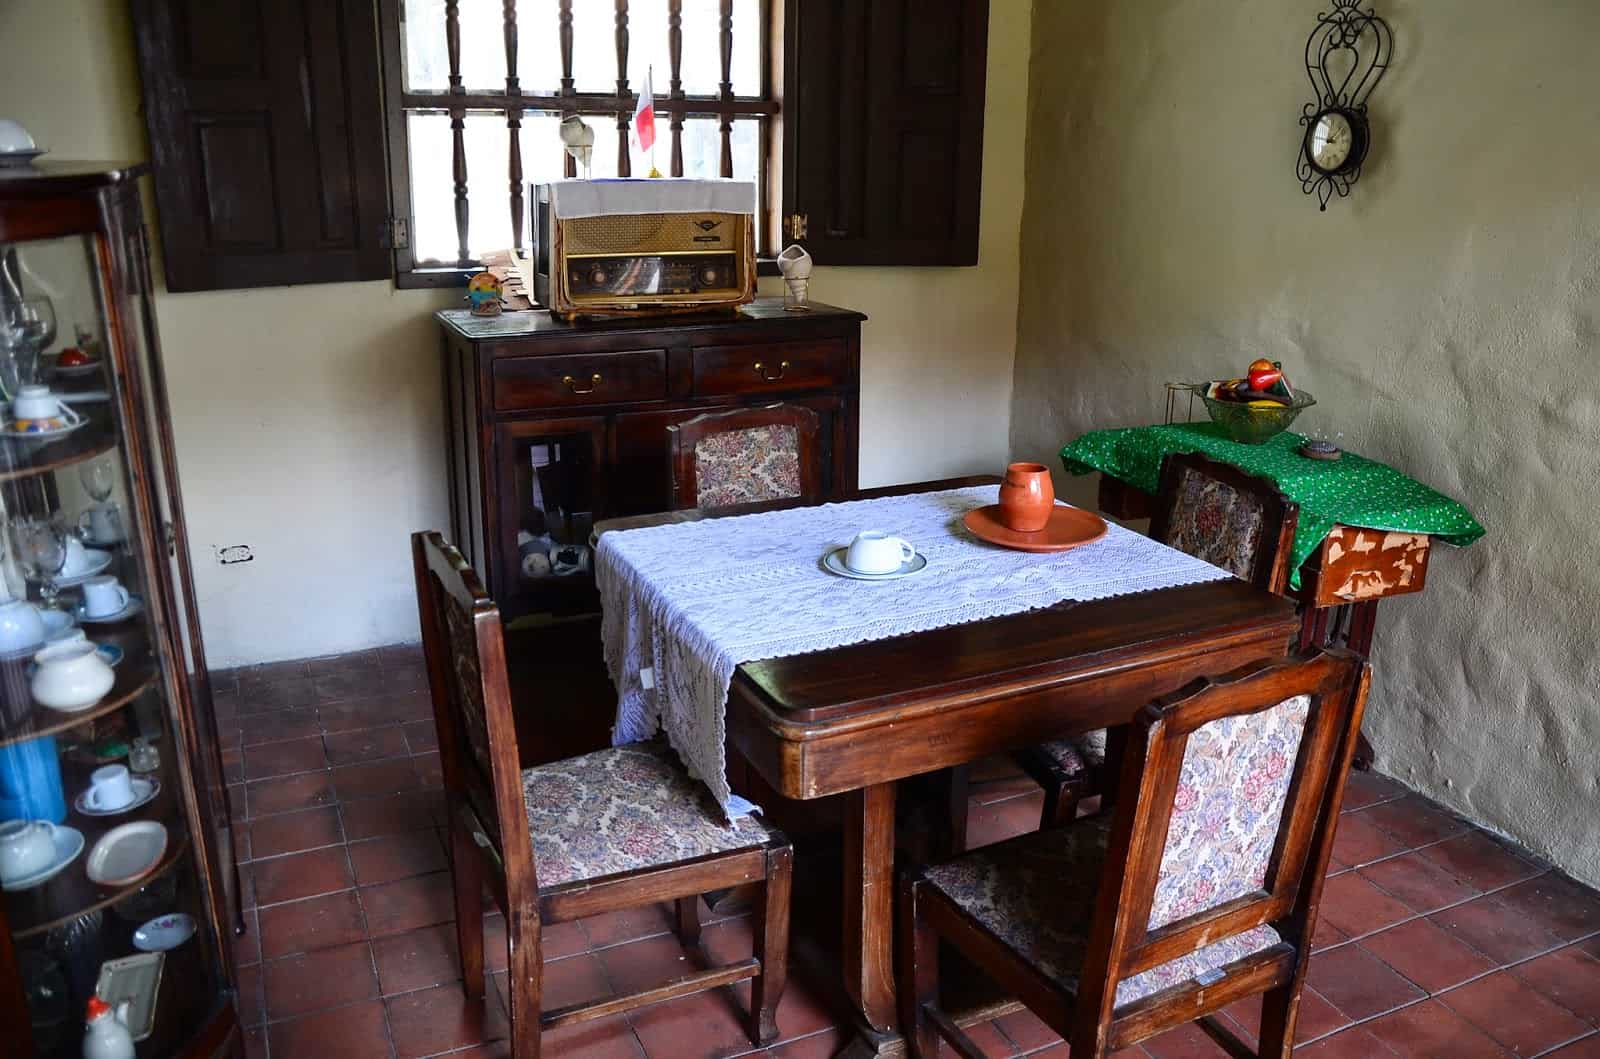 Typical home in the Mestizo village at Mi Pueblito in Panama City